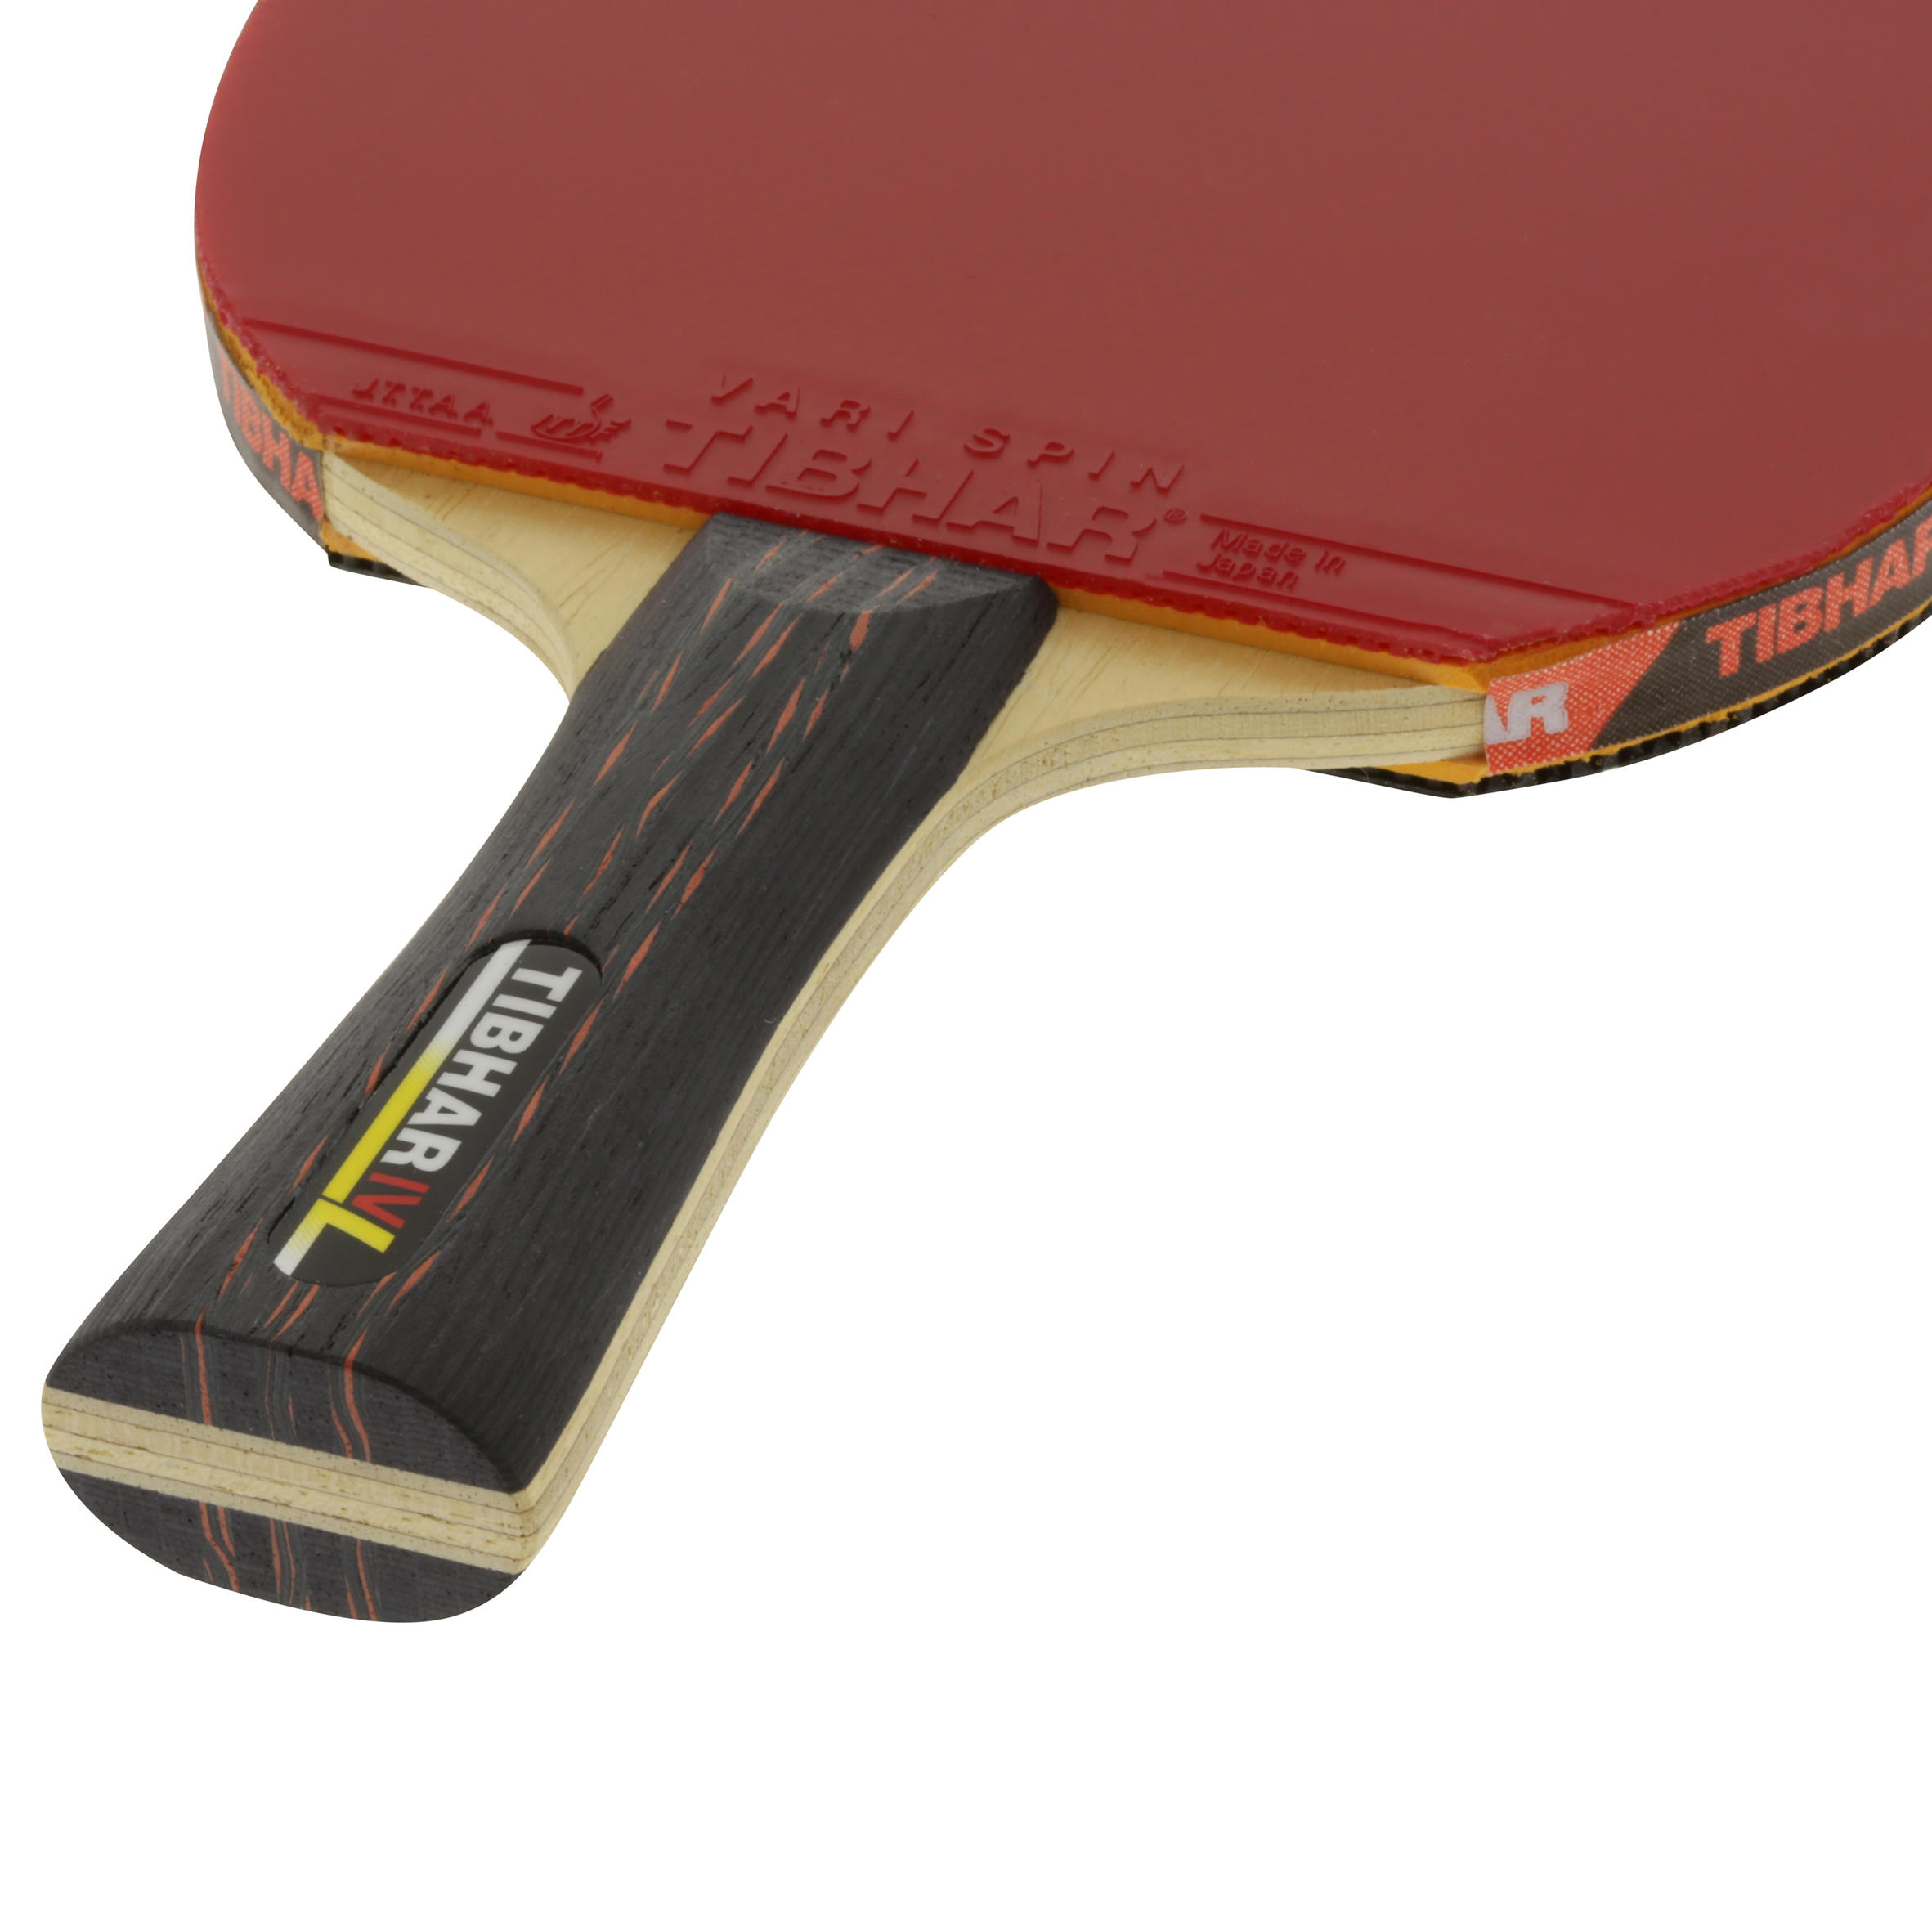 Super Allround Vari Spin Club Table Tennis Bat 5/17